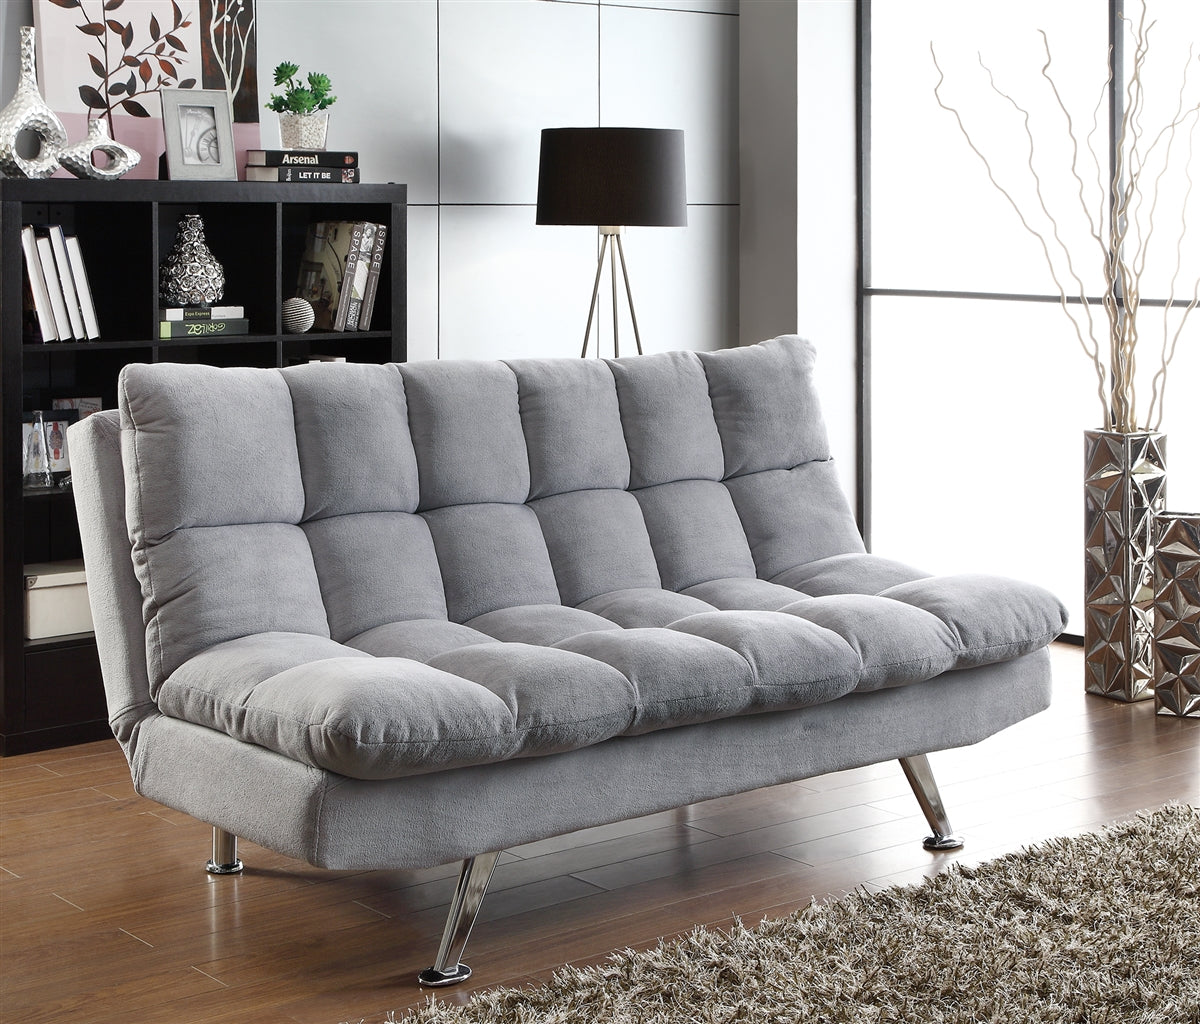 Saga Plush Gray Teddy Bear Upholstered Sofa Bed